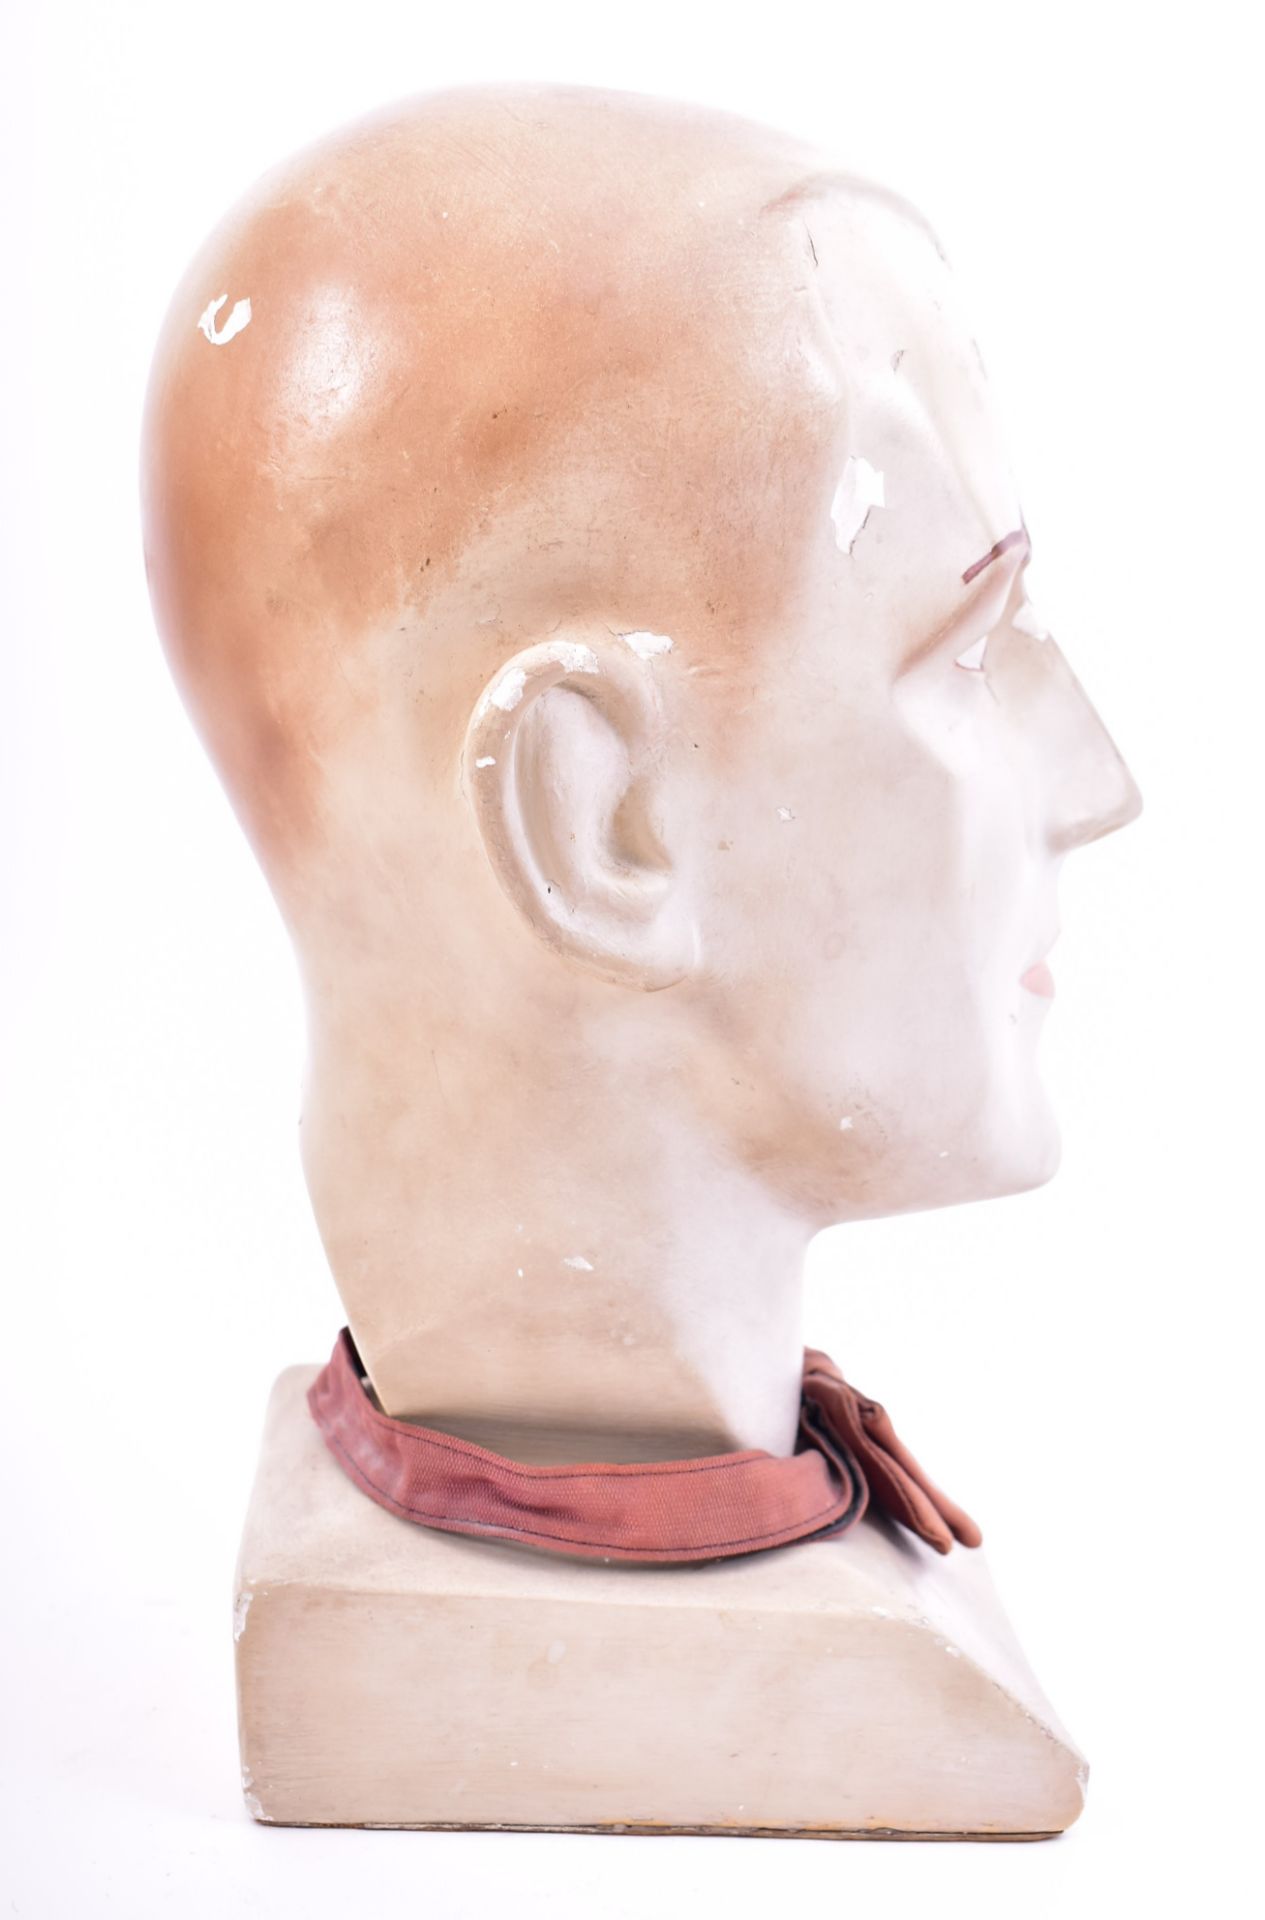 VINTAGE 1930S ART DECO SHOP POINT OF DISPLAY MANNEQUIN HEAD - Image 5 of 6